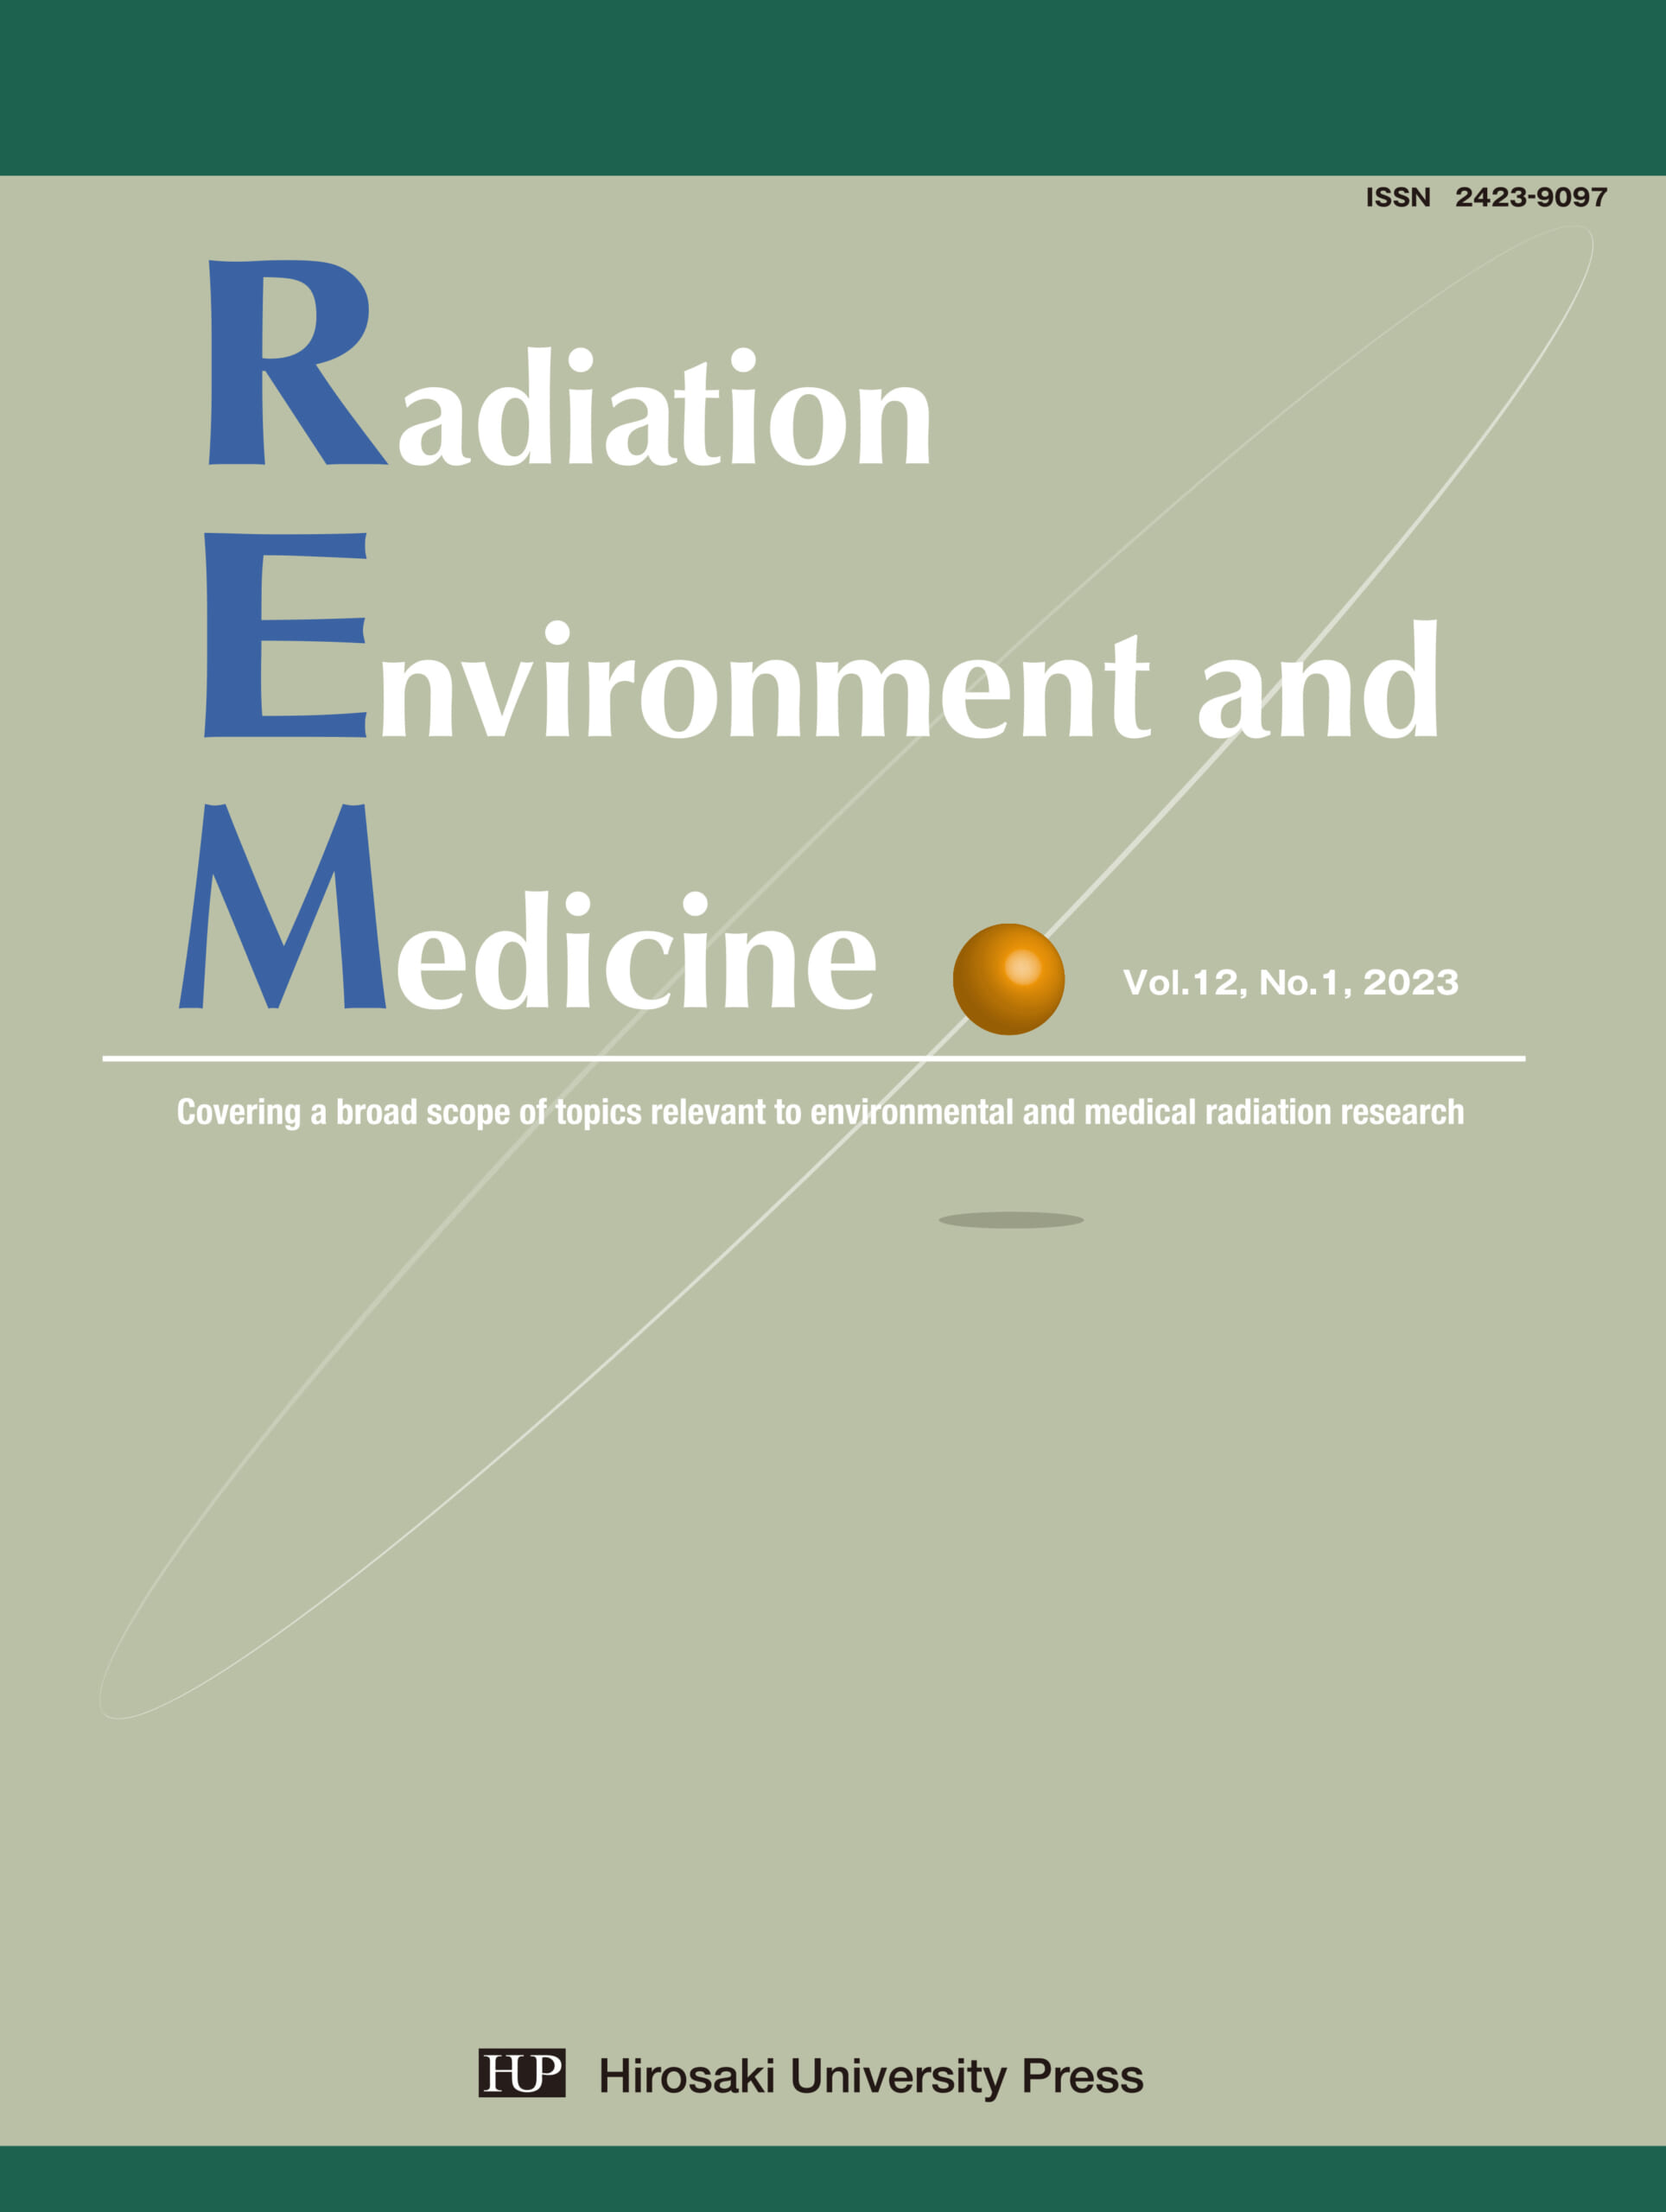 Radiation Environment and Medicine Vol.12, No.1 cover